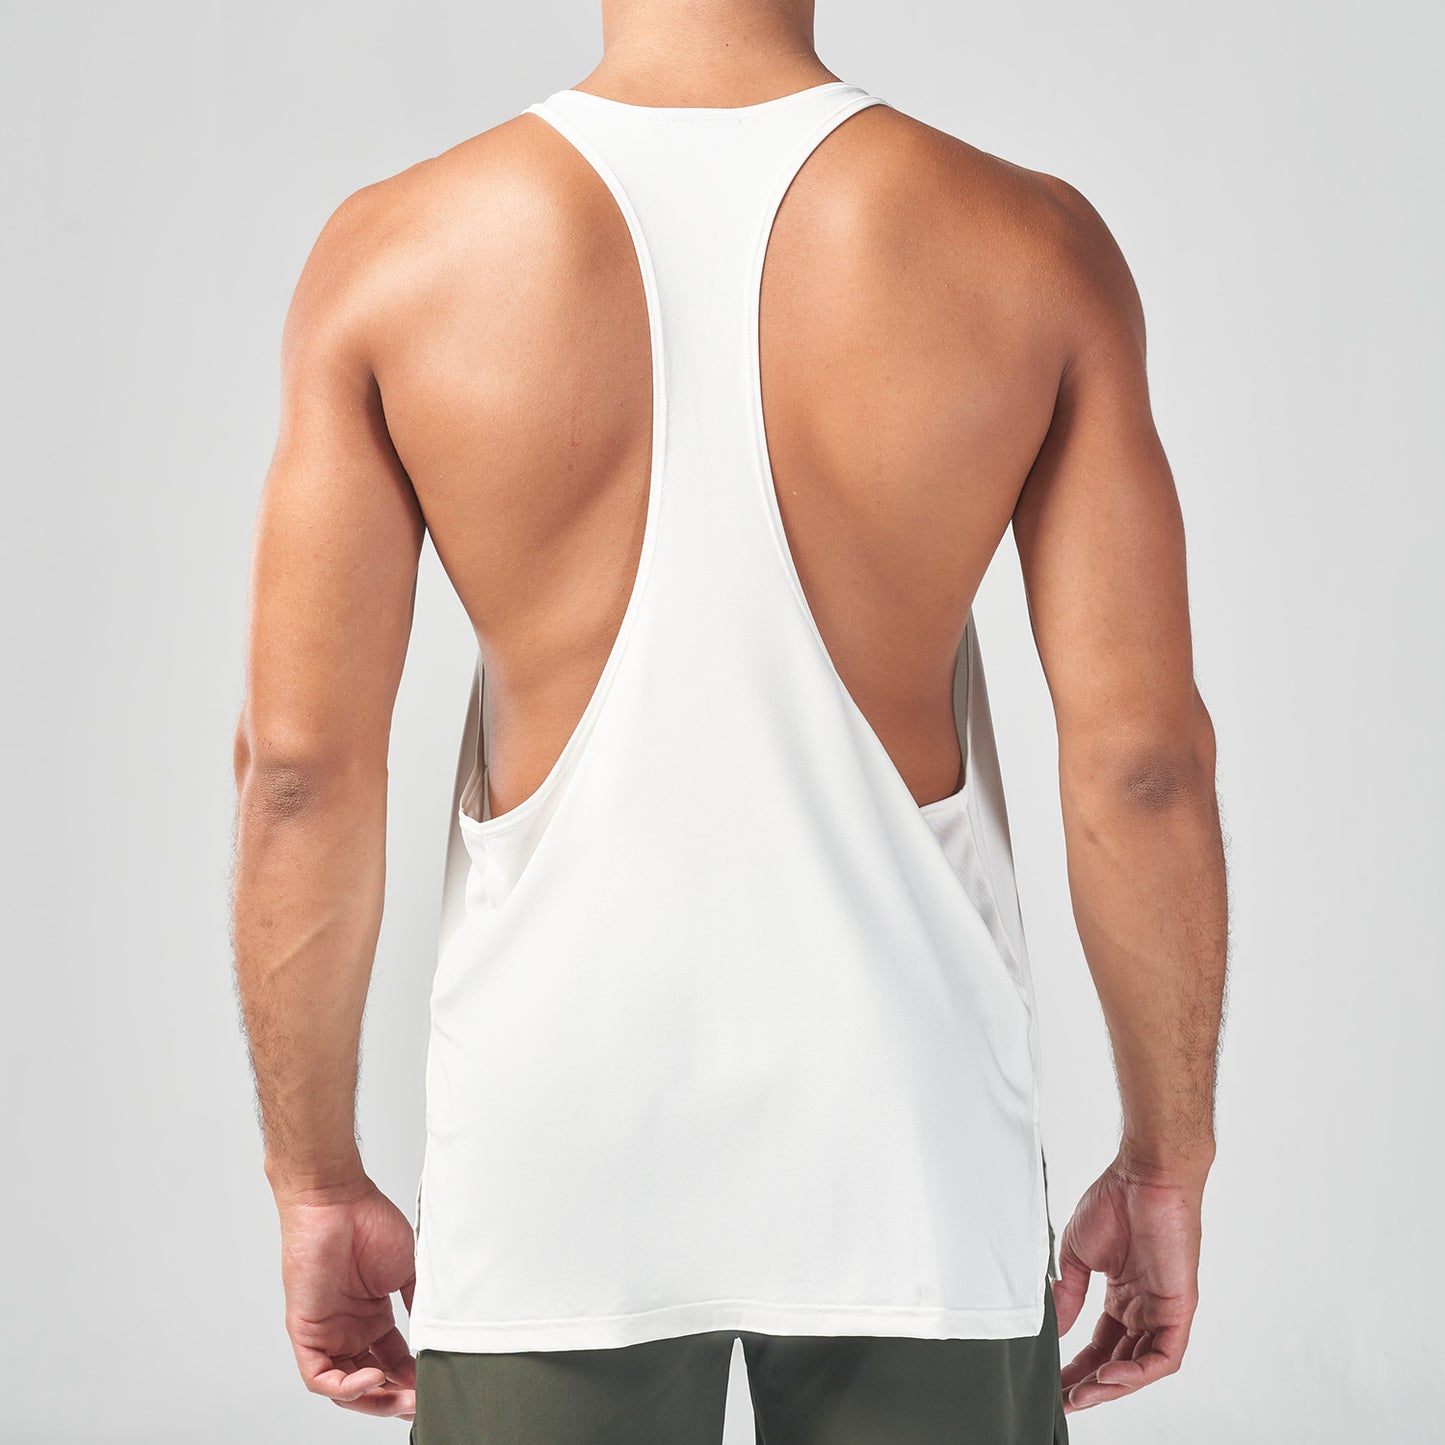 squatwolf-gym-wear-hype-tank-white-with-black-panel-stringer-vests-for-men